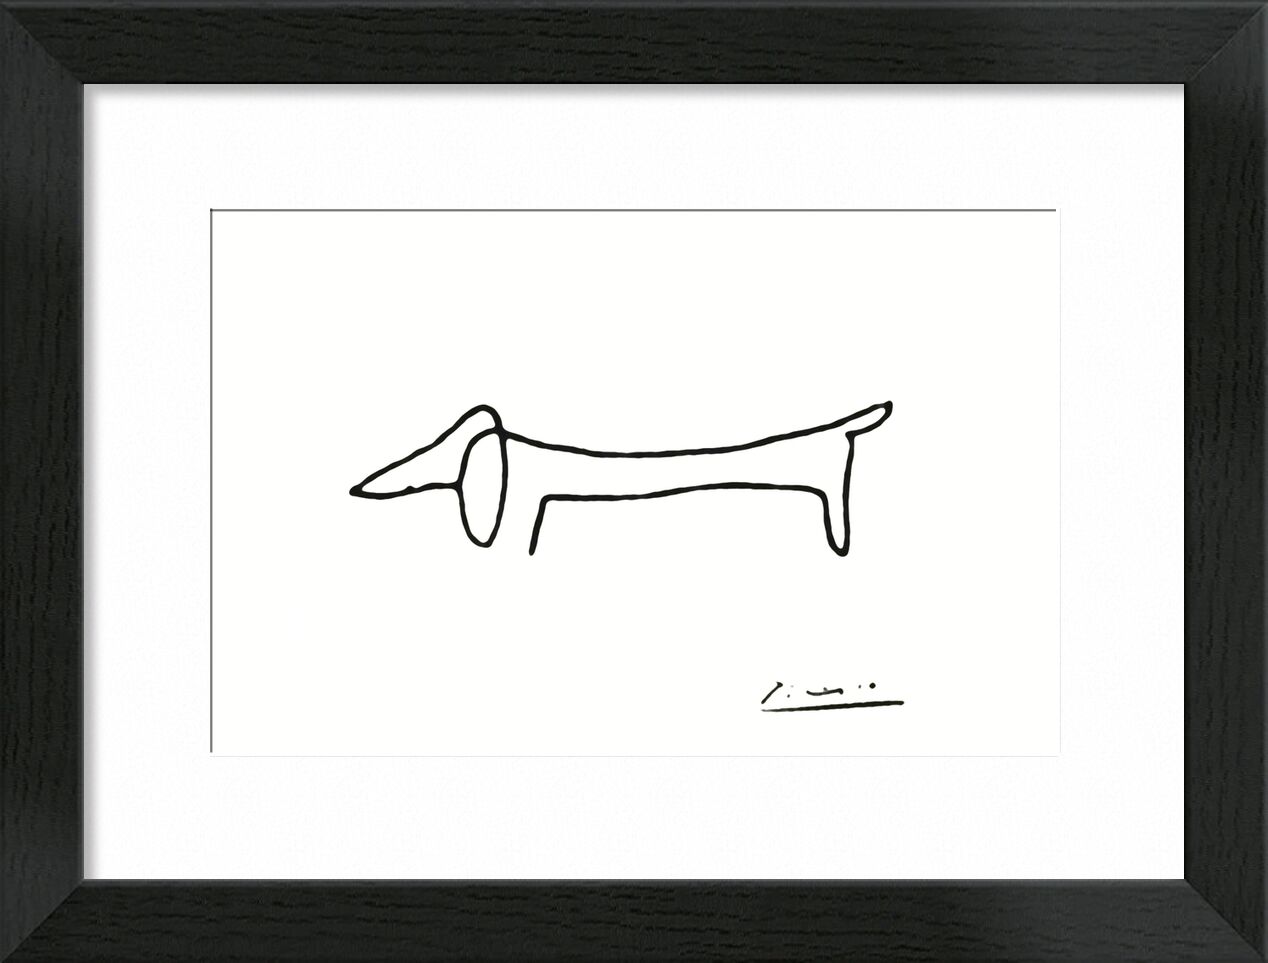 The dog - PABLO PICASSO desde Bellas artes, Prodi Art, dibujo, dibujo a lápiz, línea, blanco y negro, PABLO PICASSO, perro, una línea